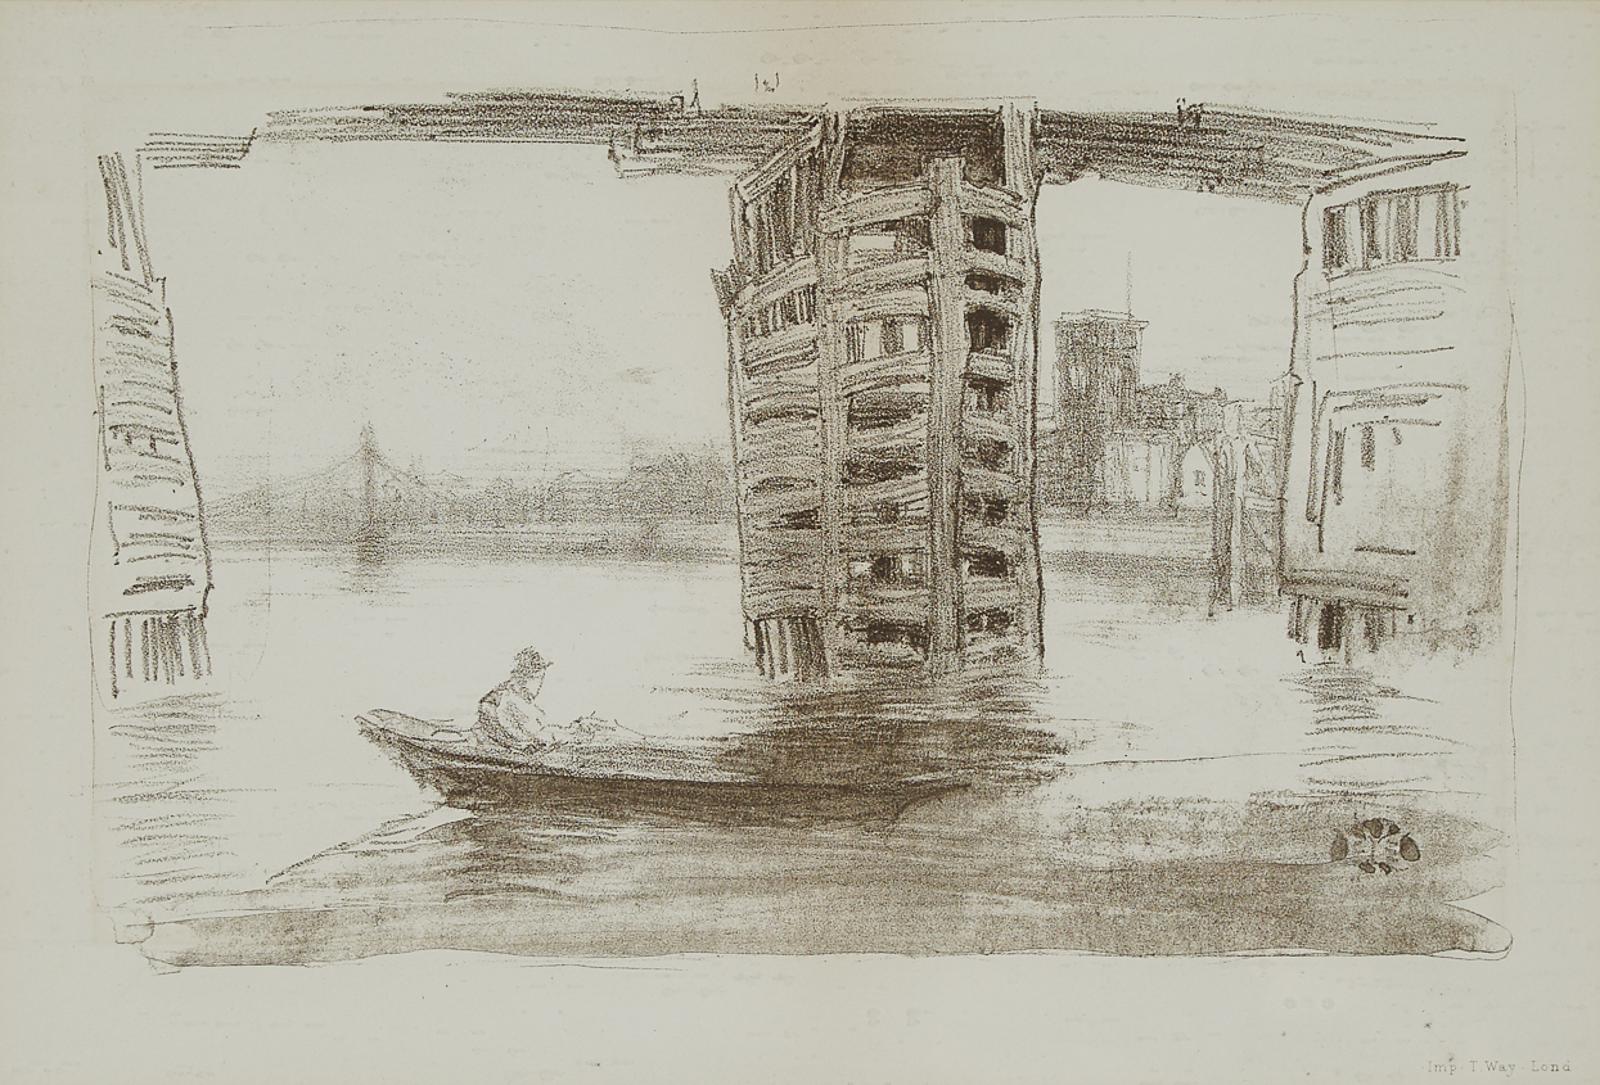 James Abbott McNeill Whistler (1834-1903) - The Broad Bridge, 1878 [way, 8; Spink, Stratis & Tedeschi, 11]